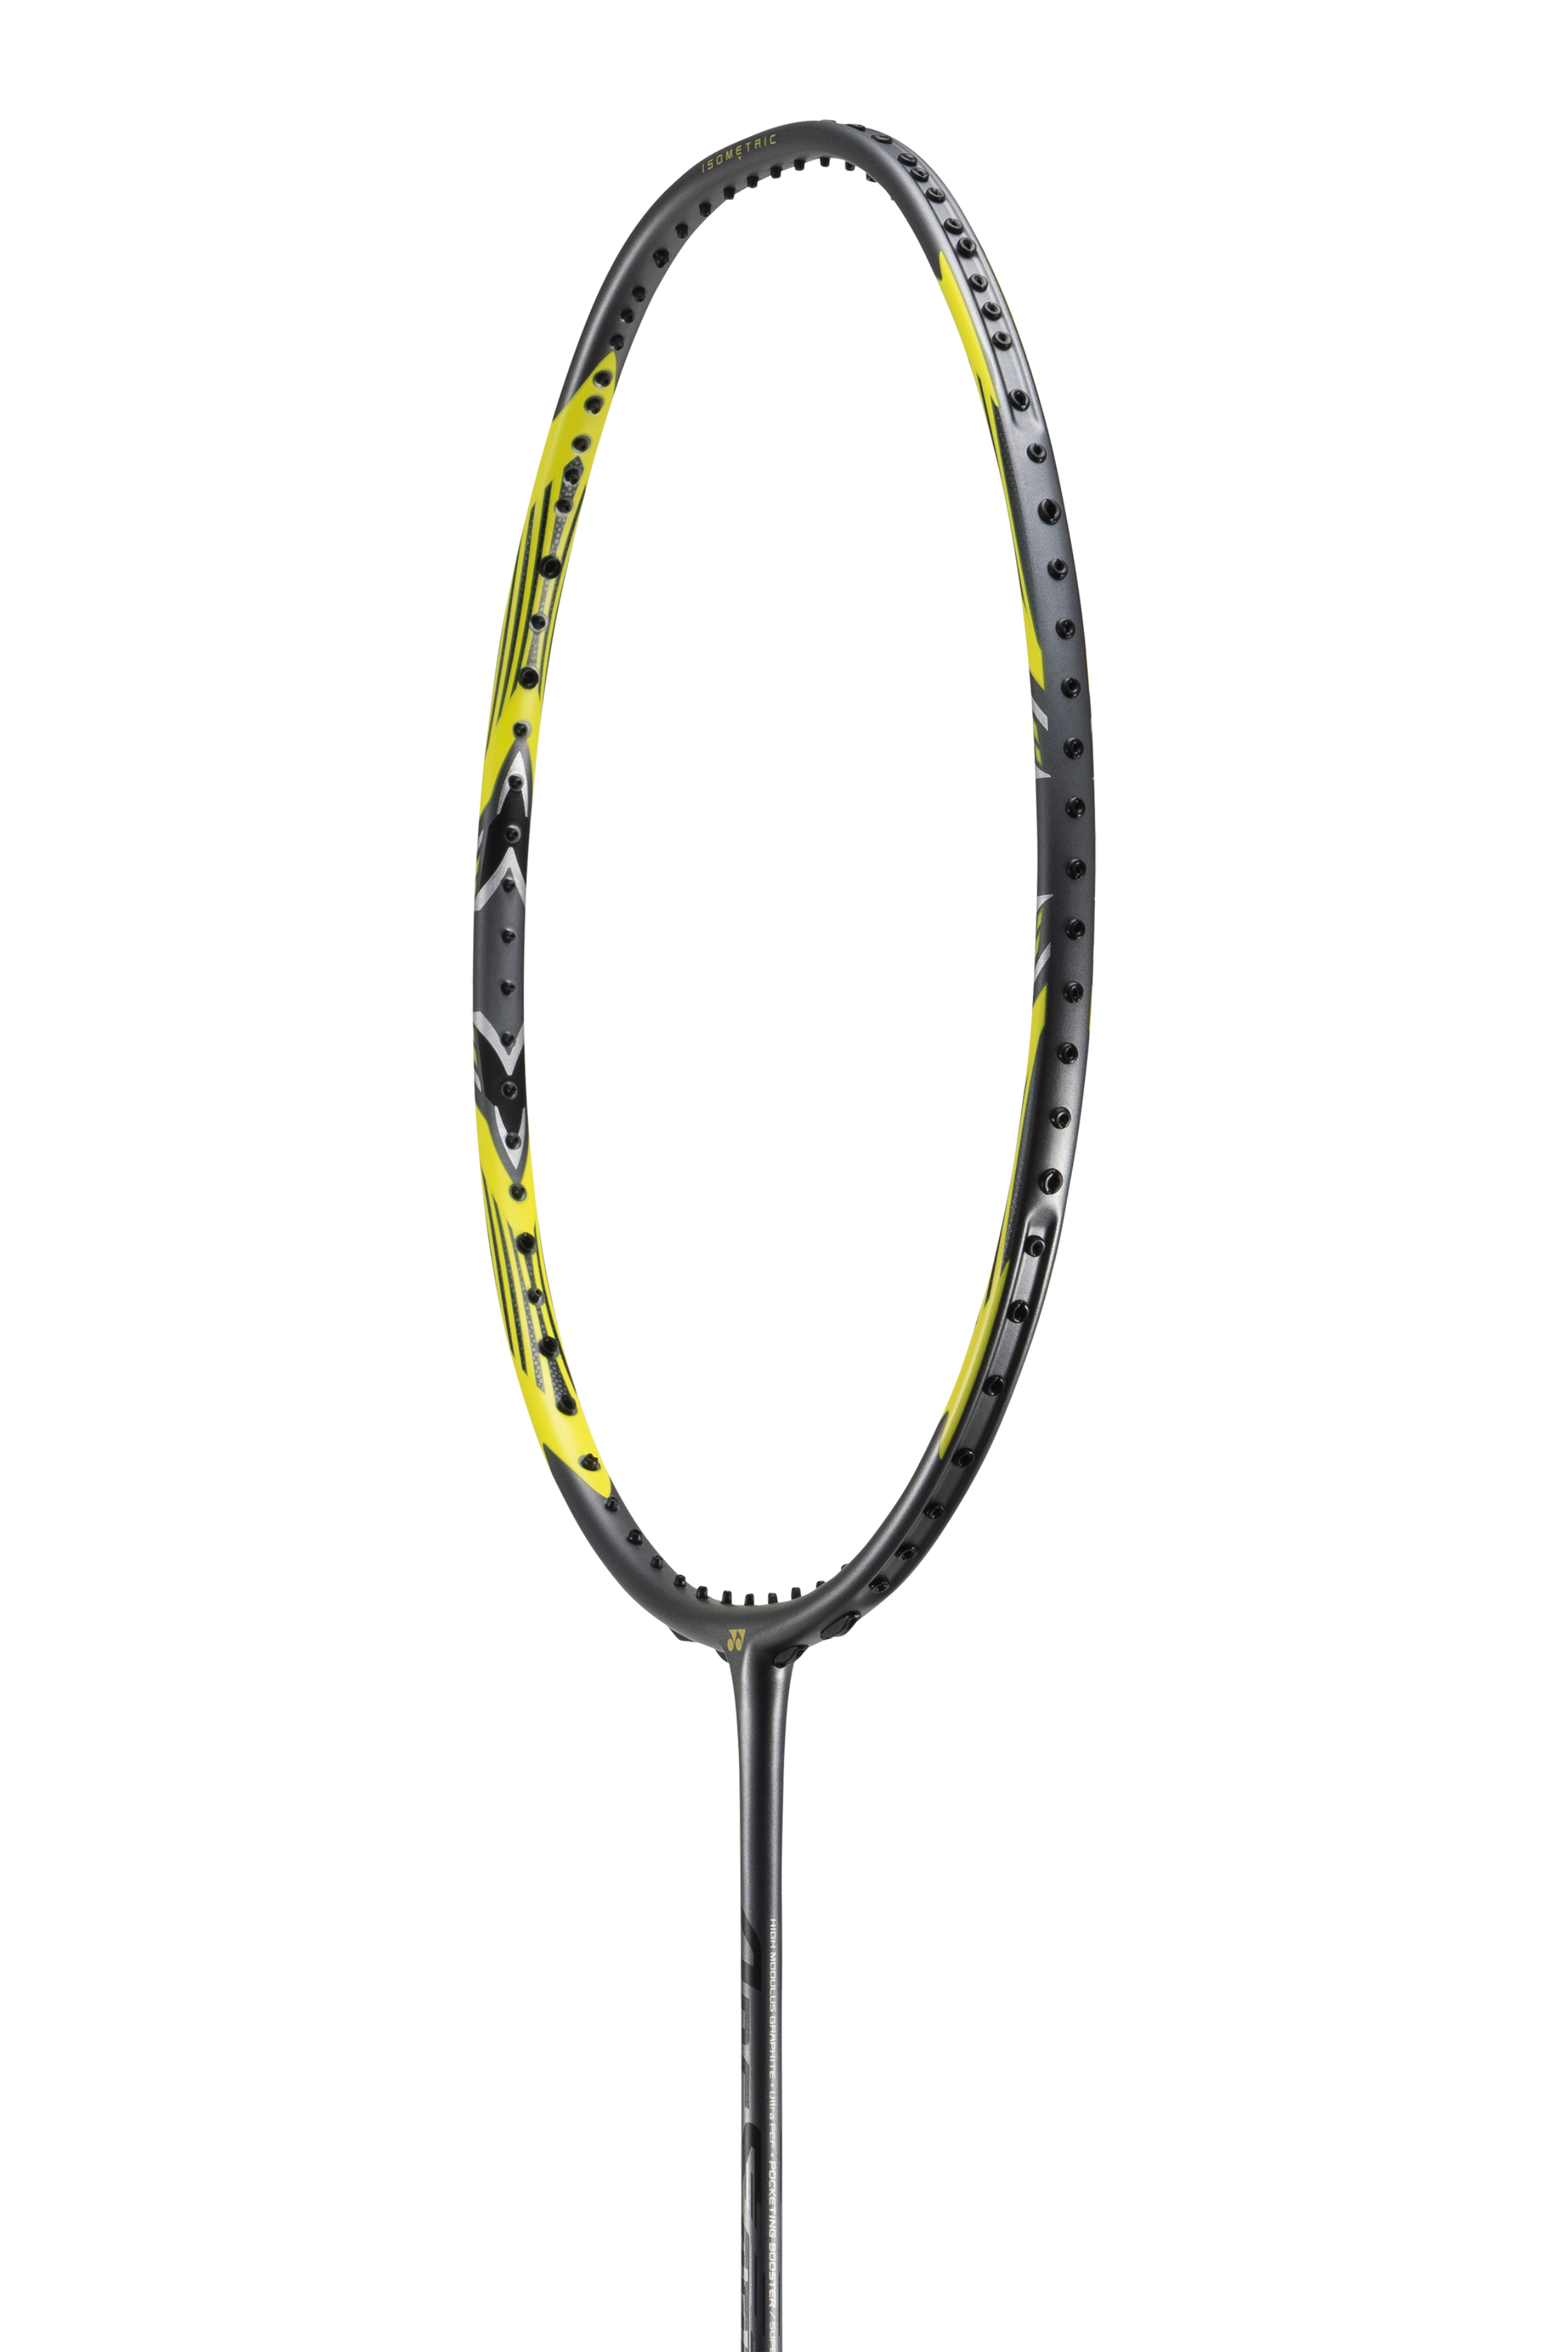 Yonex ArcSaber 7 Pro Badminton Racket Badminton Avenue